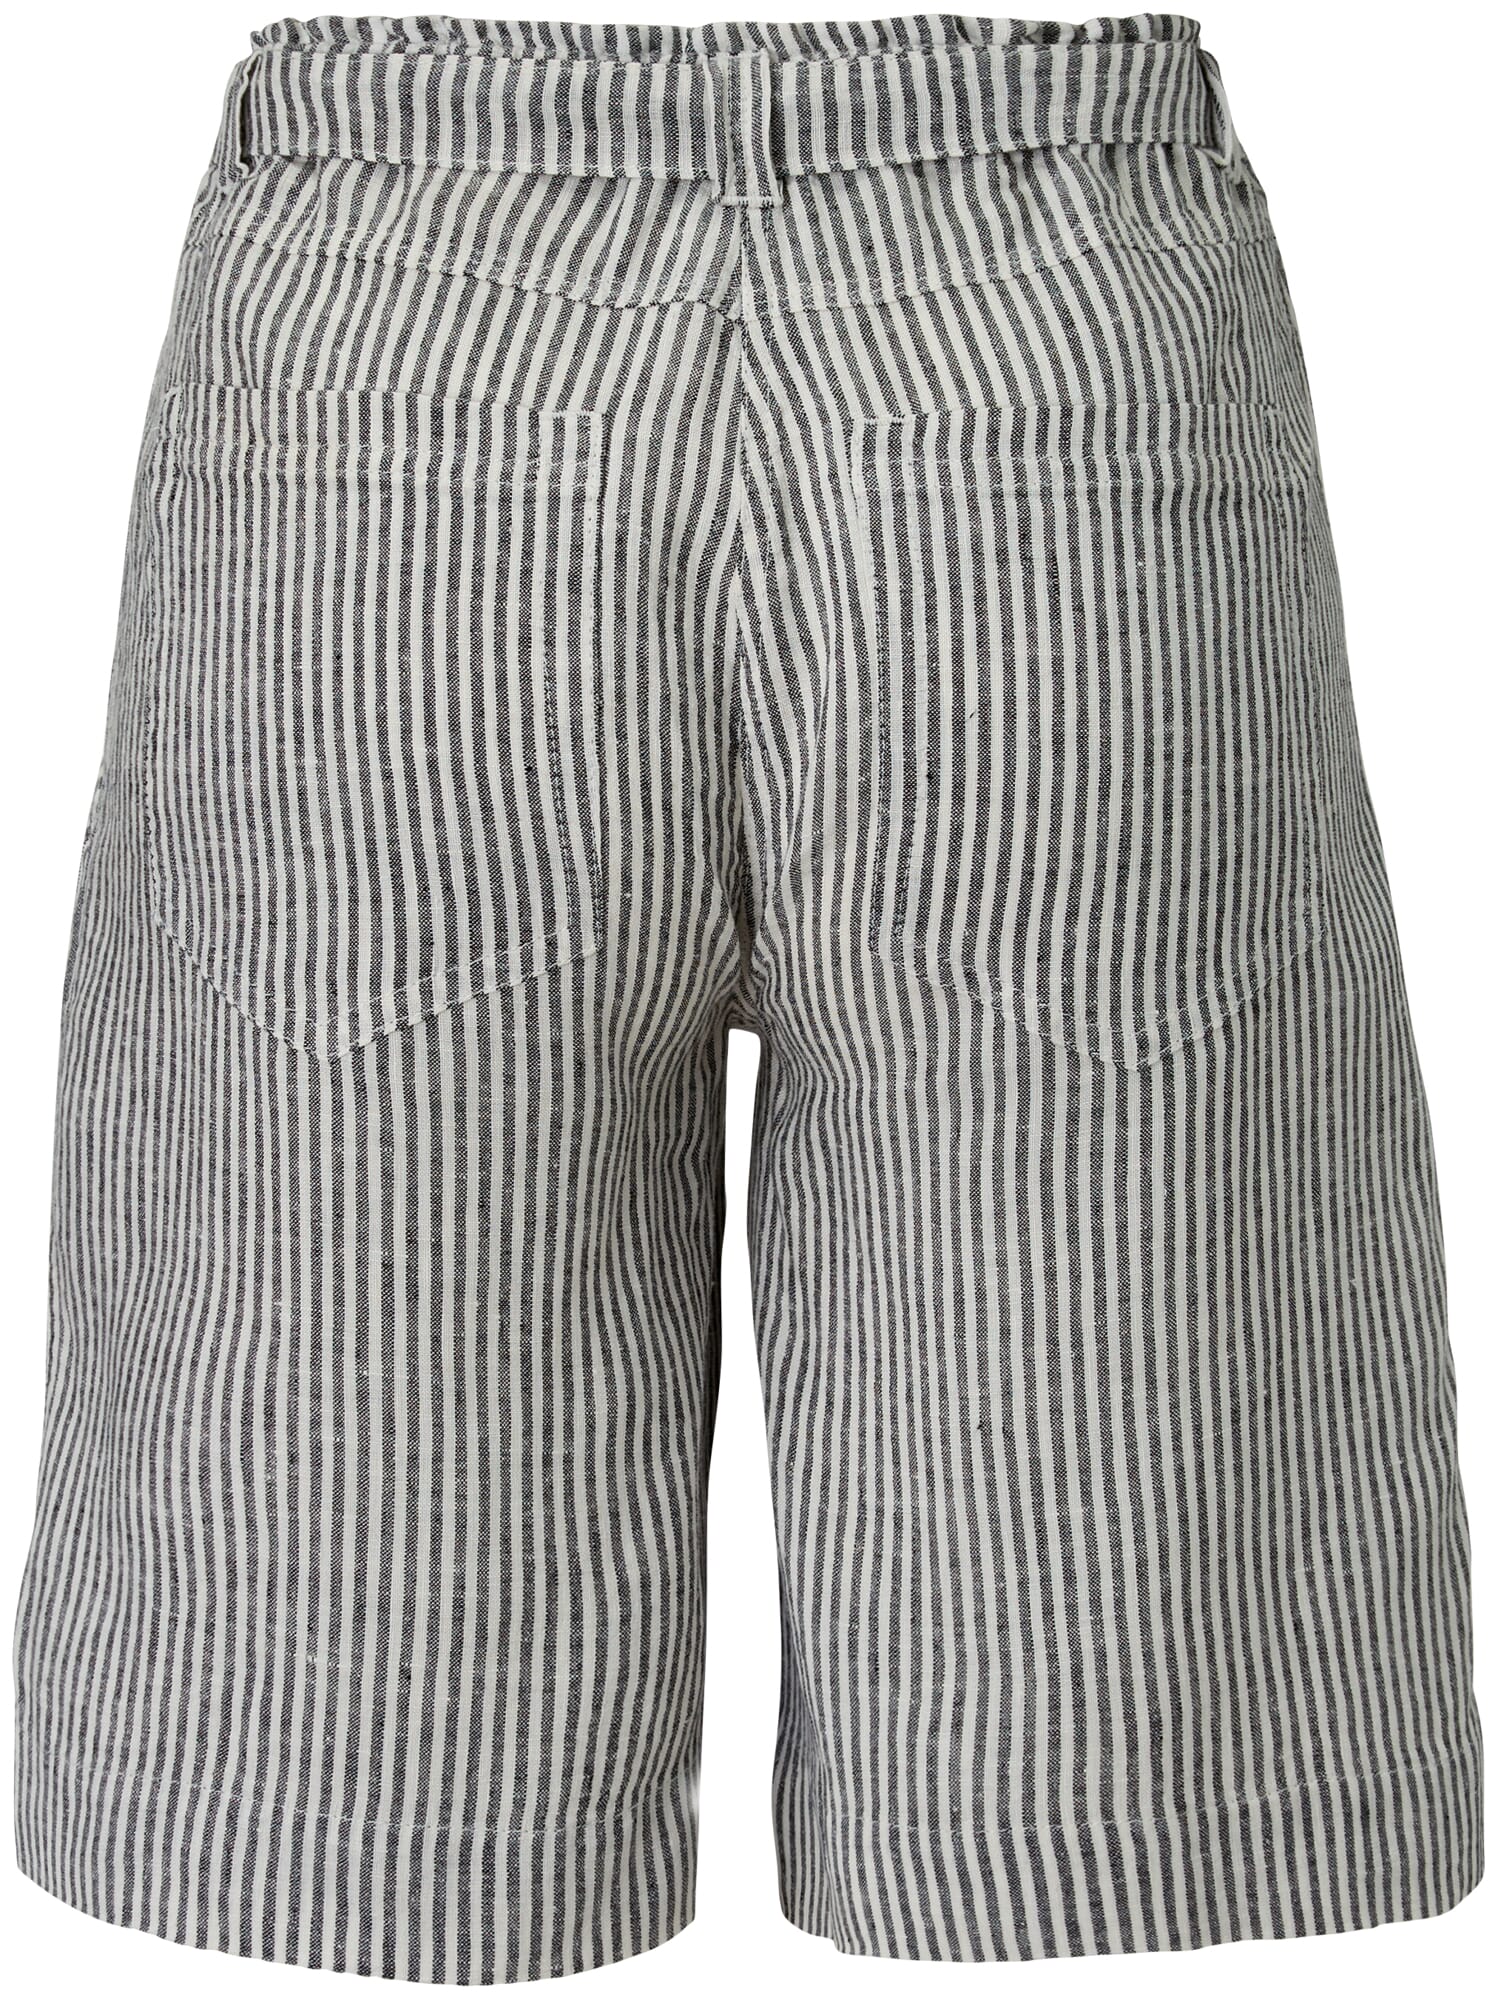 Familiar striped cotton shorts - Grey